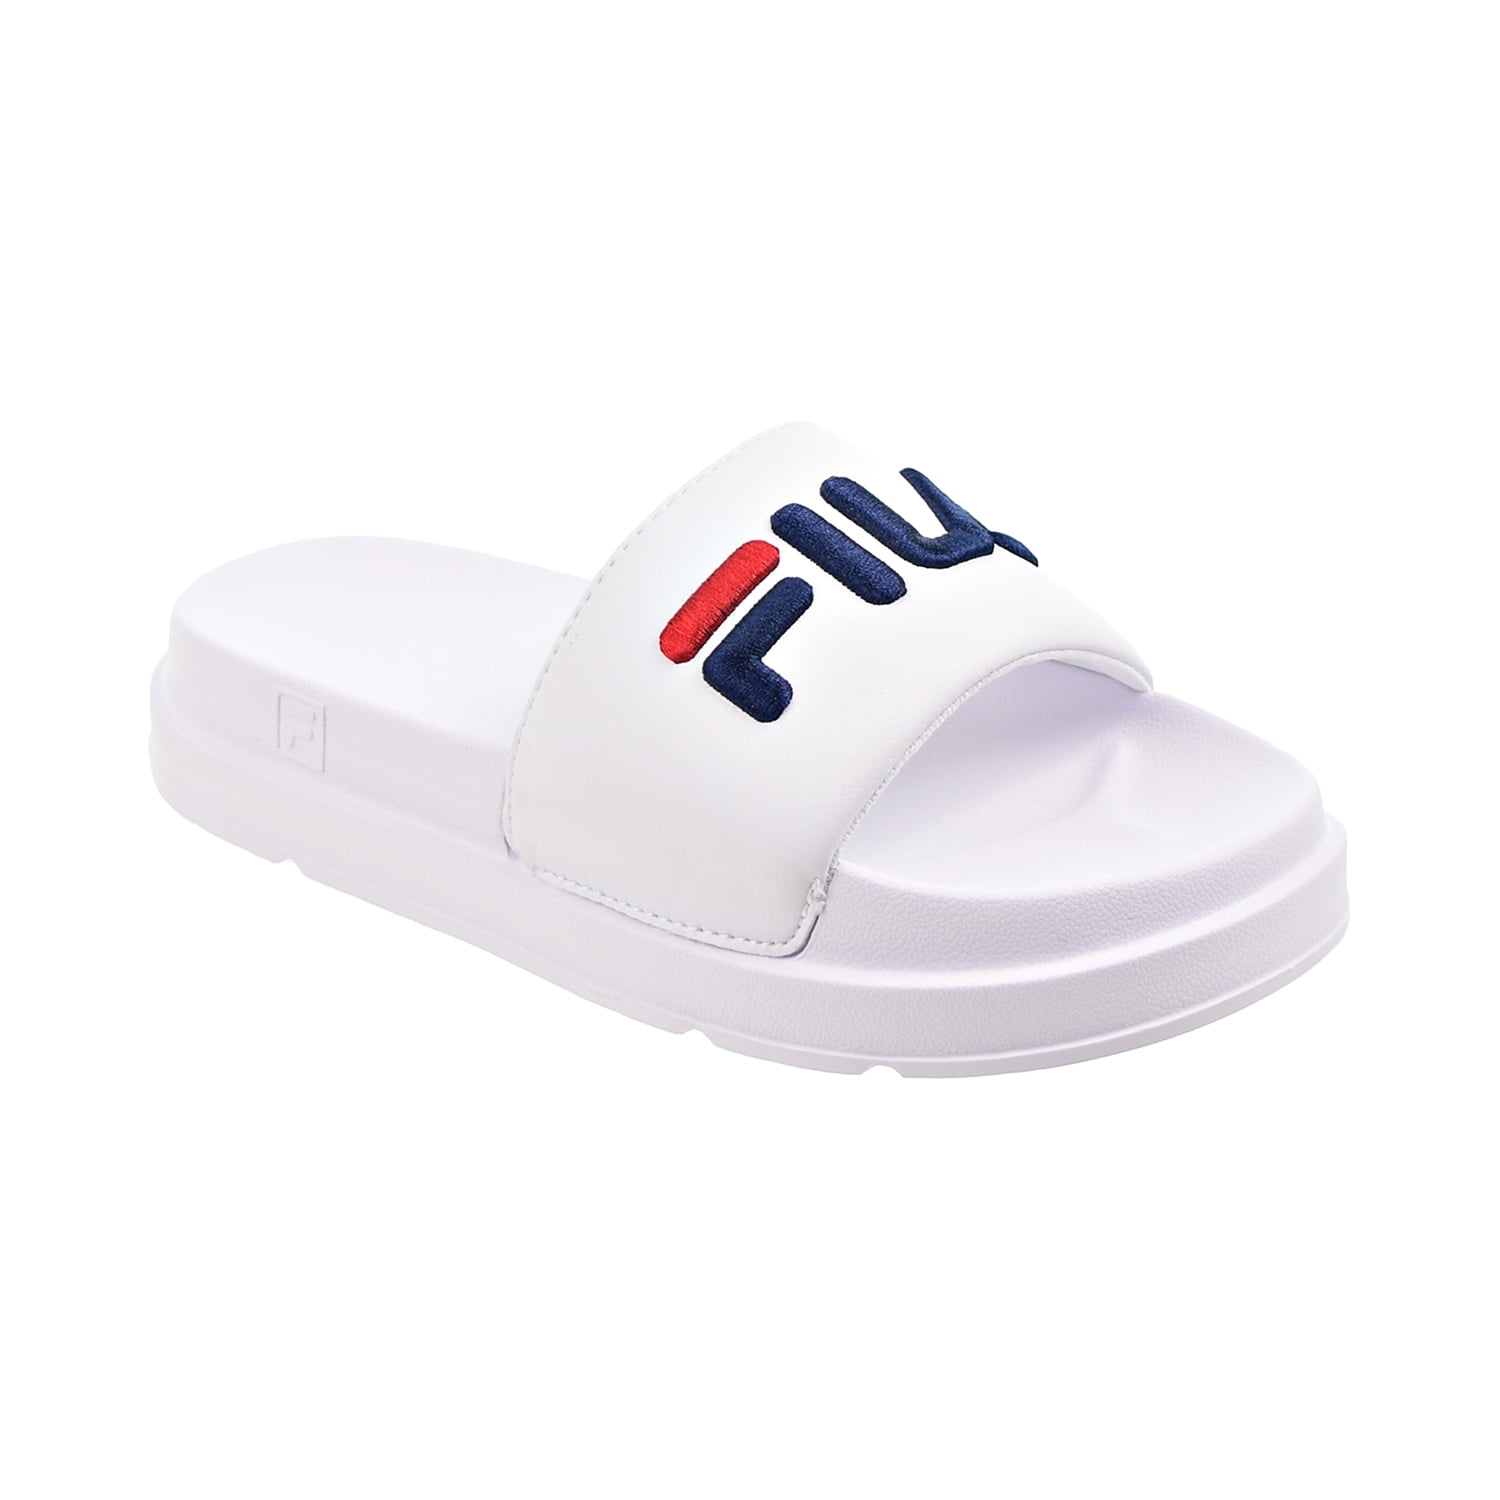 Fila Bold Women's Sandals White-Navy-Red 5sm00032-125 - Walmart.com